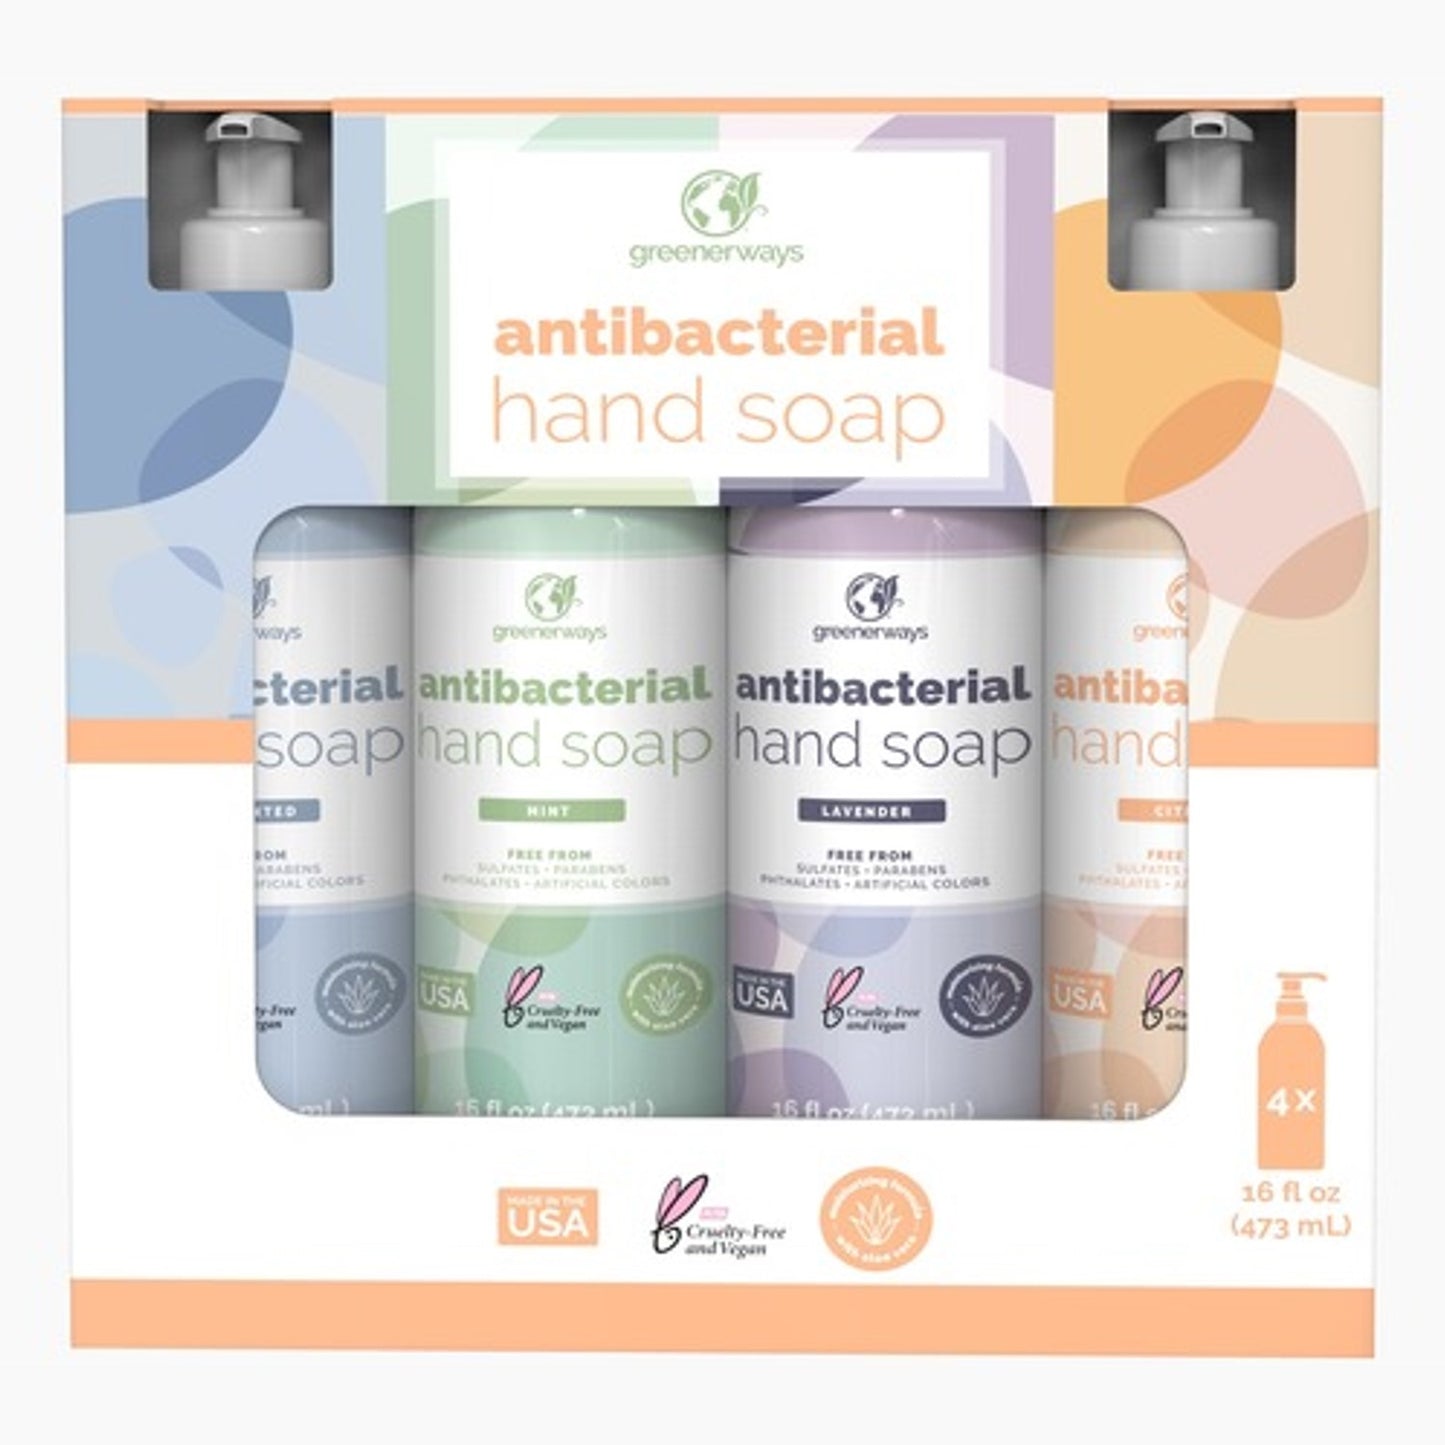 Greenerways Antibacterial Hand Soap Citrus Lavender Mint Unscented 16oz - 4 Pack